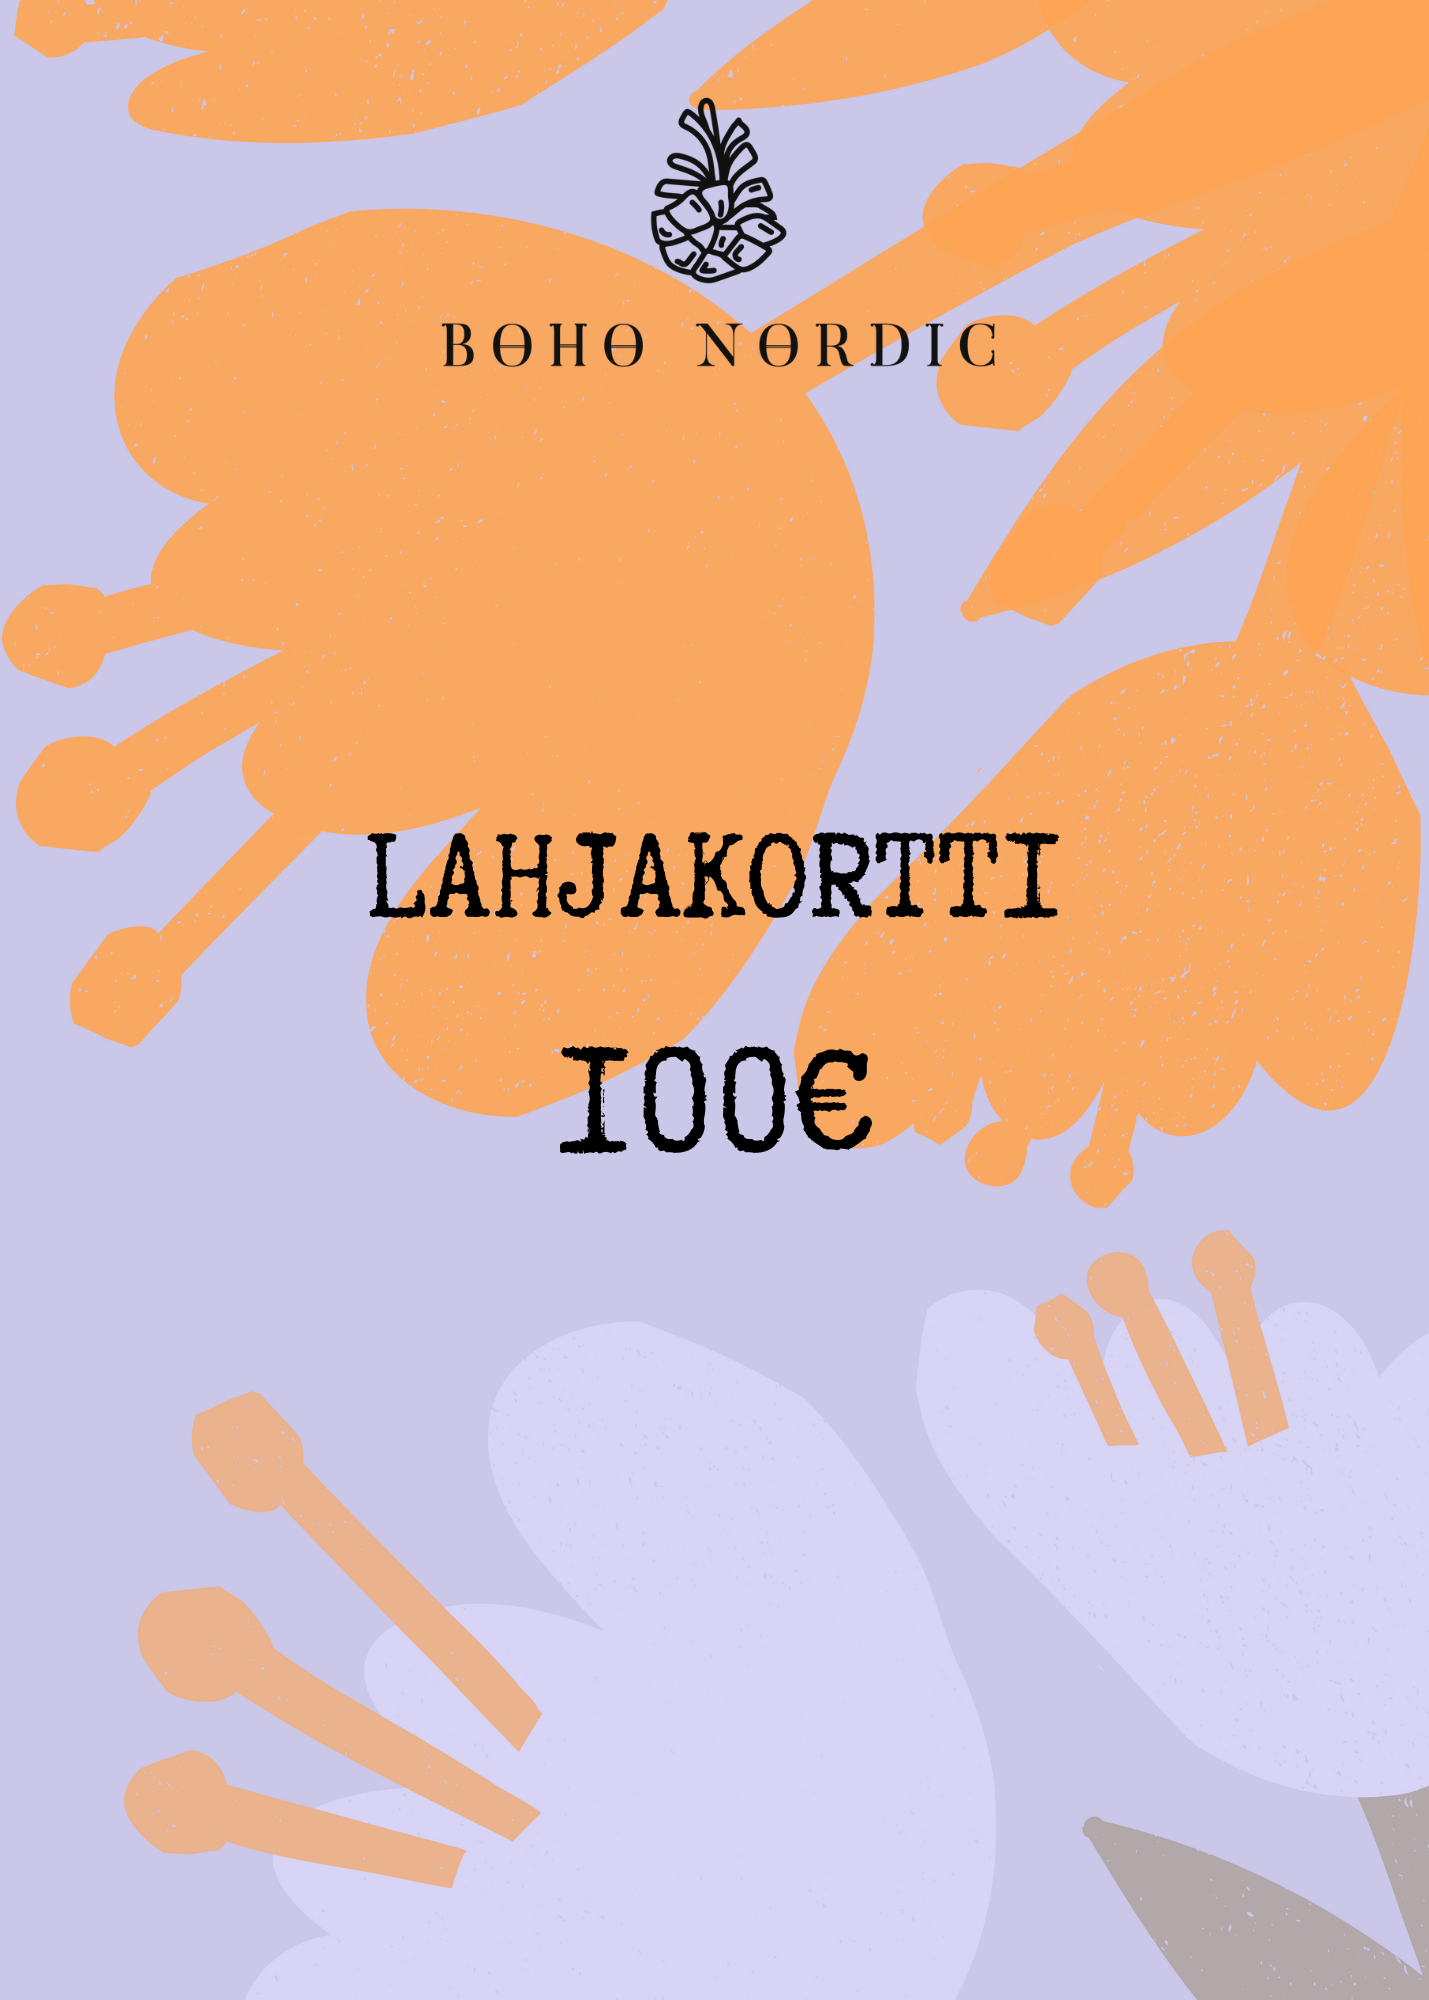 Boho Nordic- LAHJAKORTTI